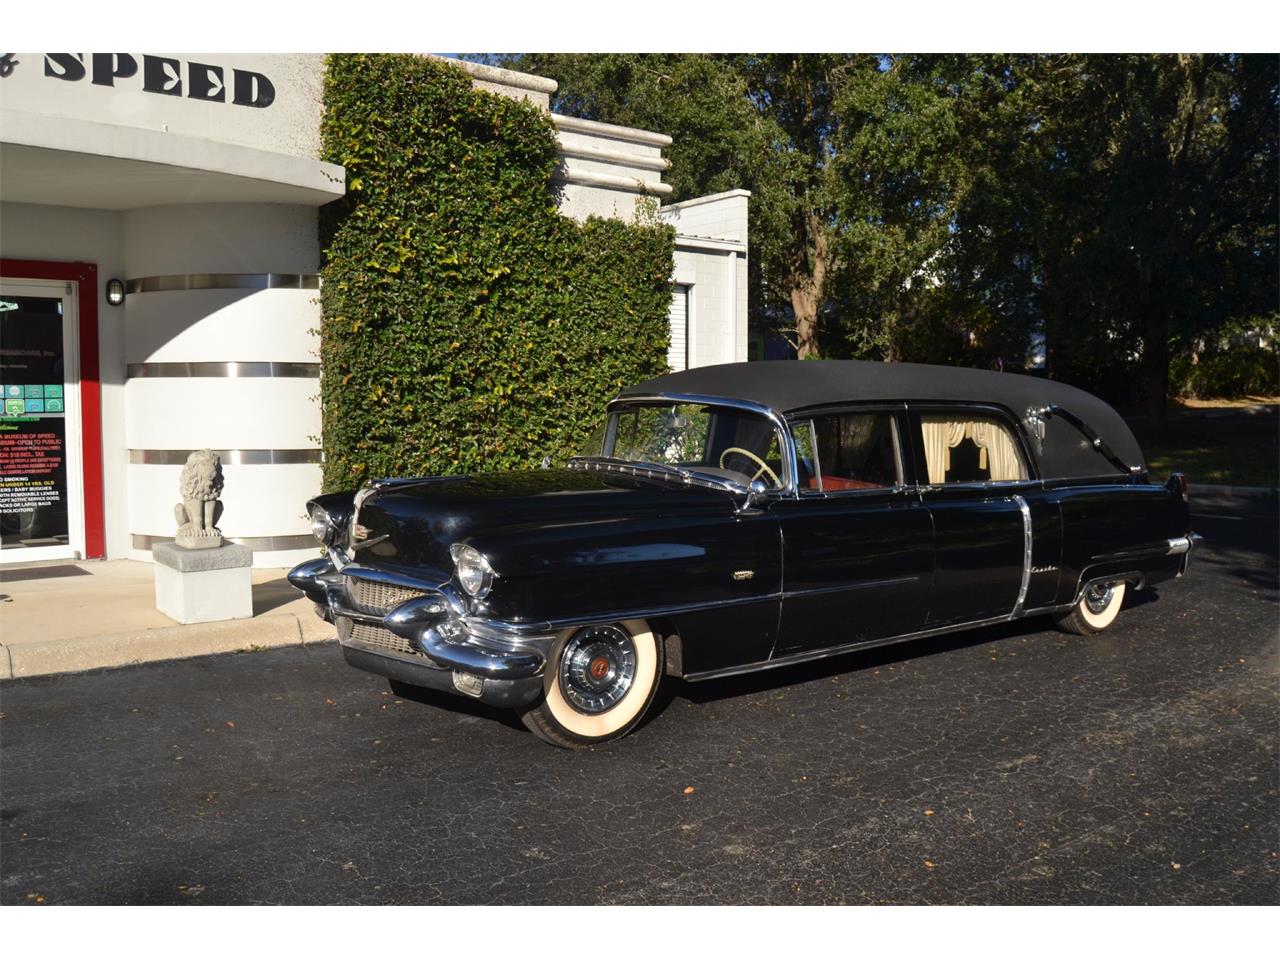 1956 Cadillac Eureka Landau Funeral Coach for sale in Mt. Dora, FL